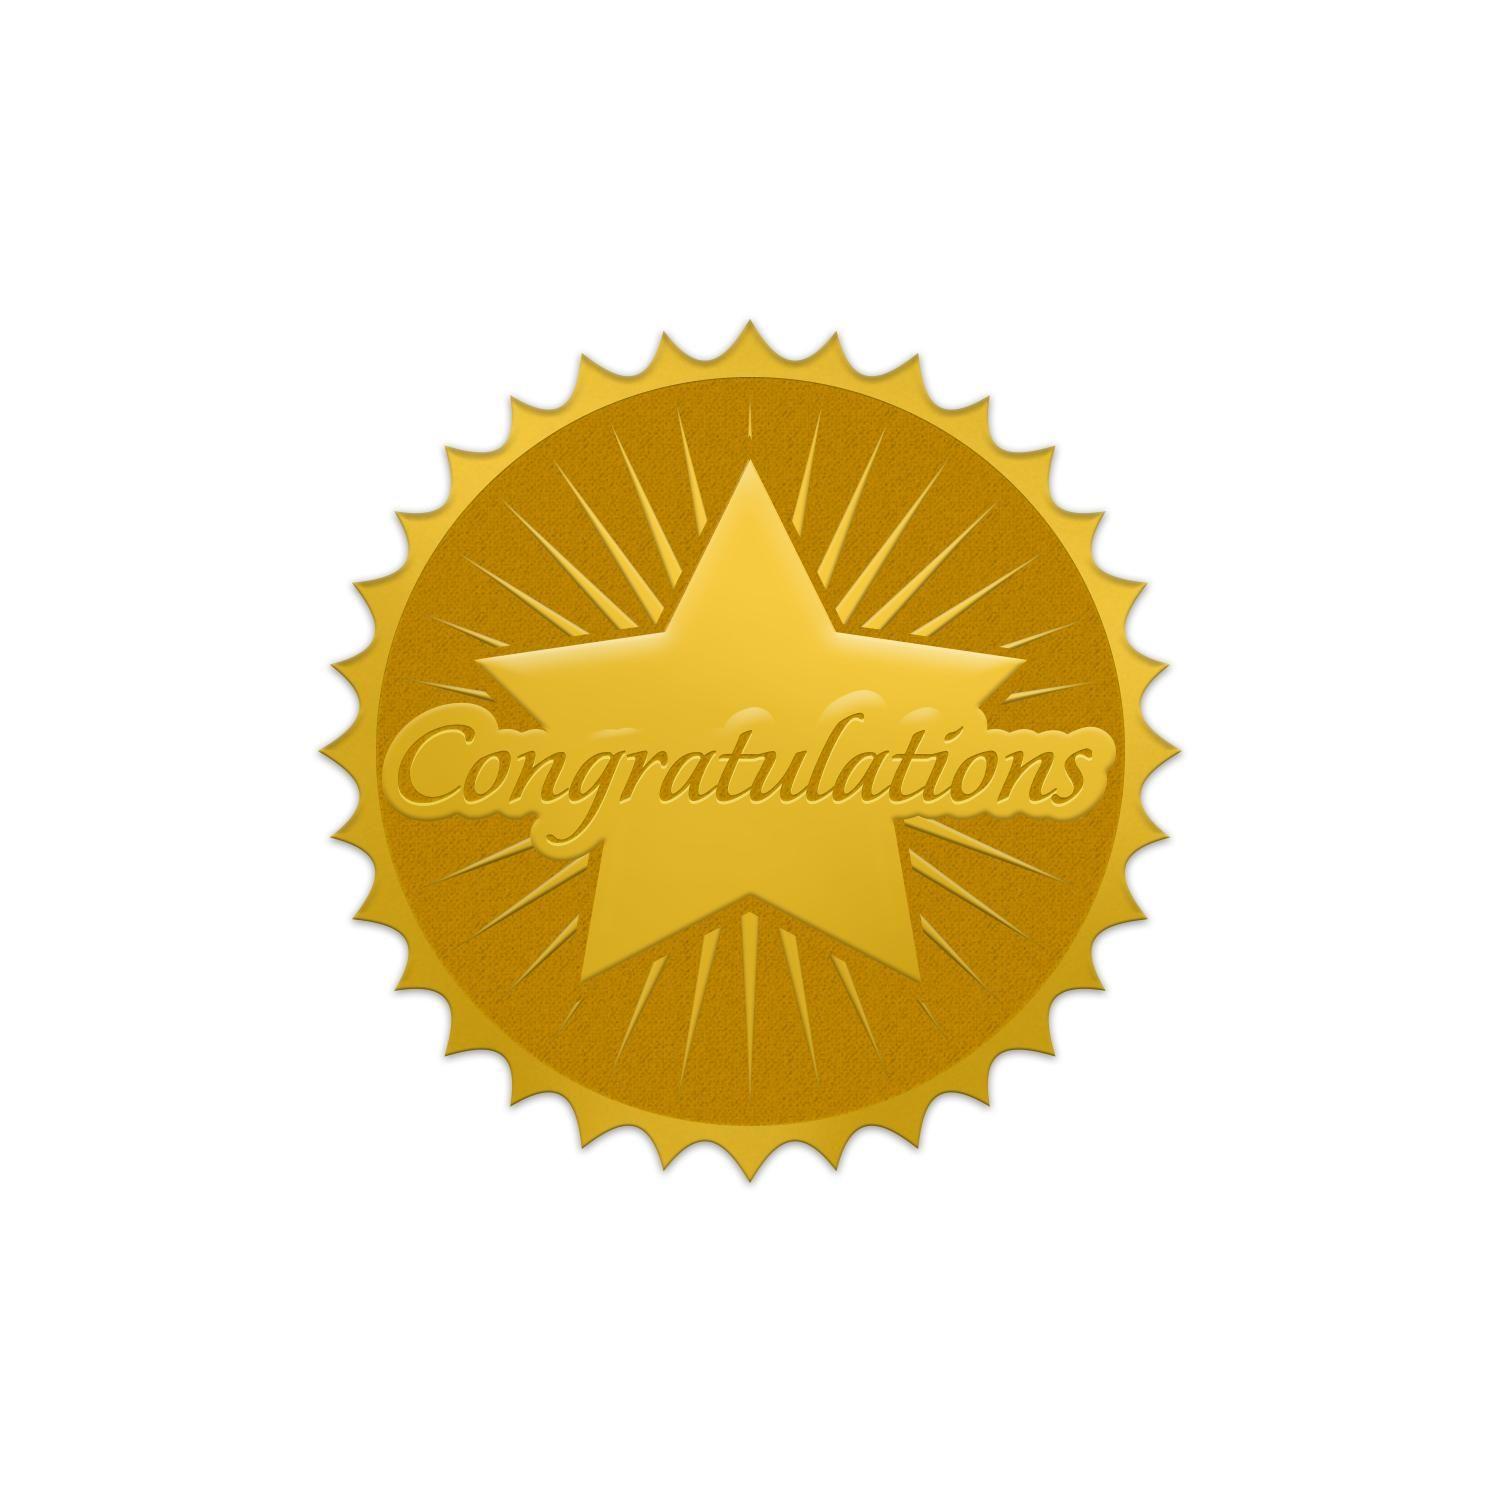 Congratulations Logo - Congratulations Gold Foil Certificate Seals